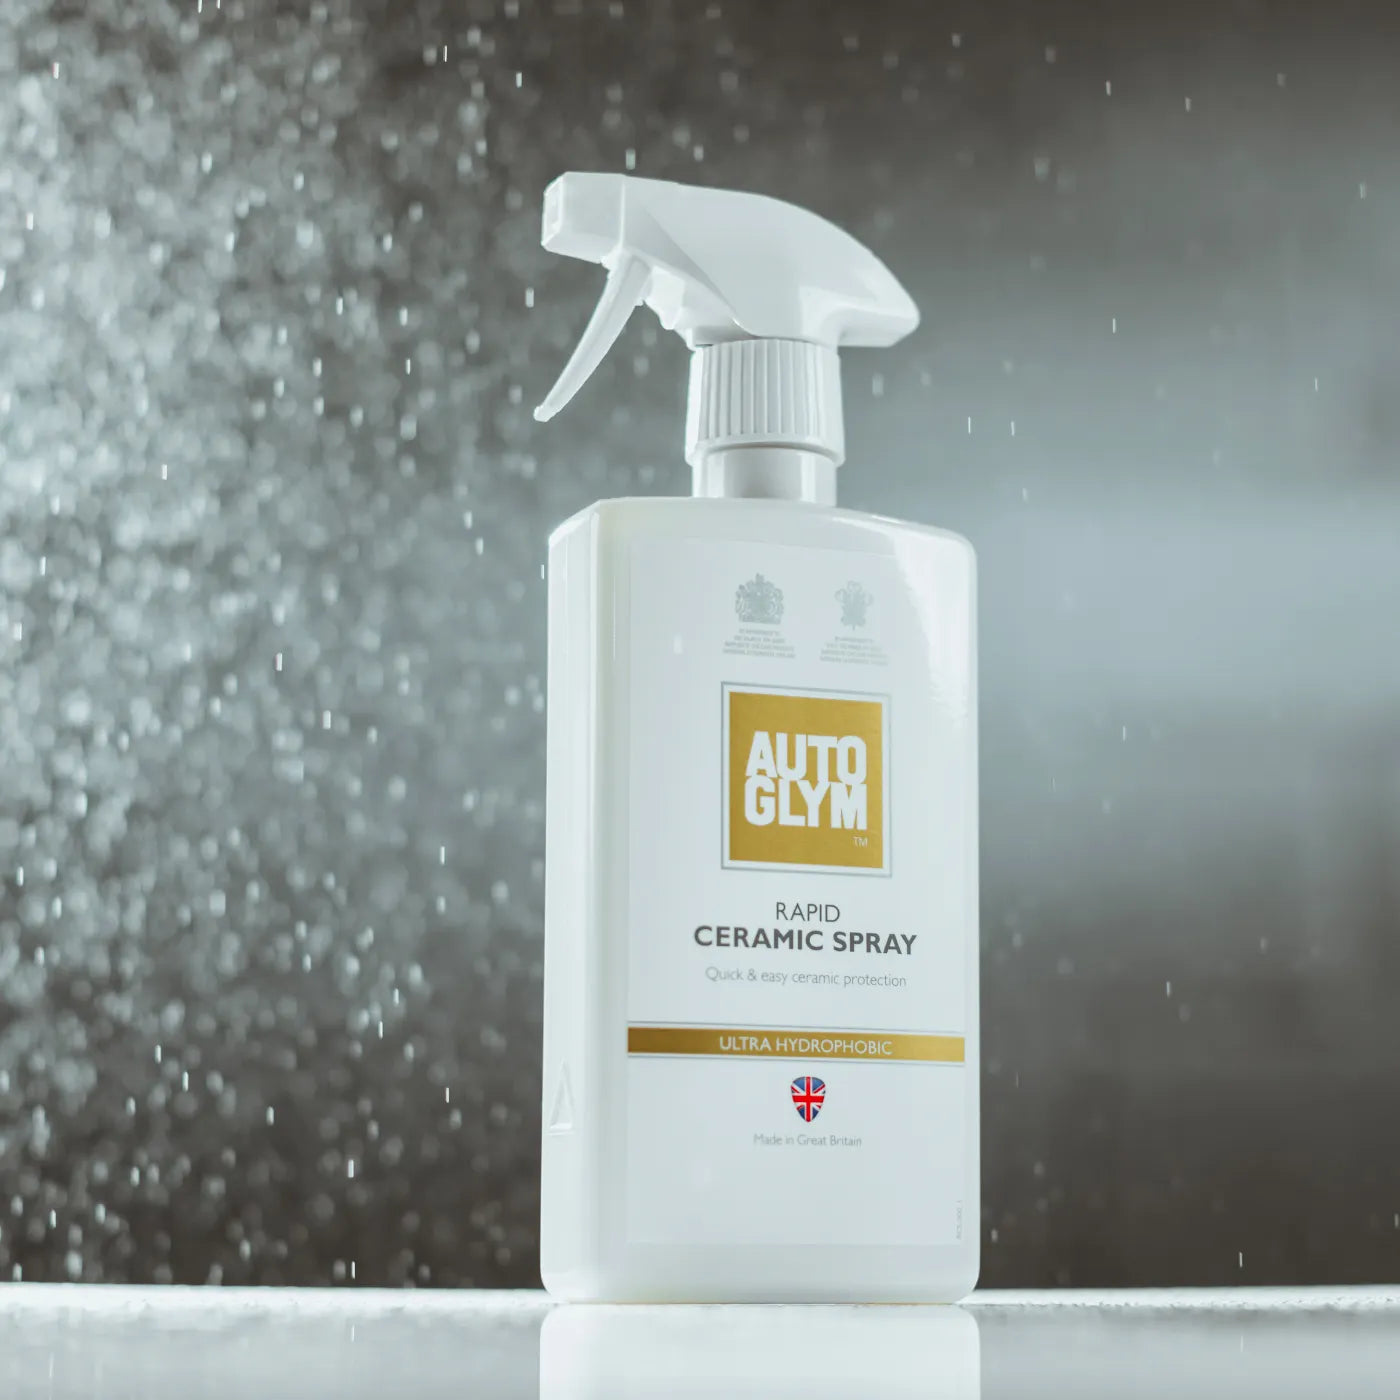 Autoglym Ceramic Spray. Autoglym Cork Ireland. White bottle with golden label. Ultra Hydrophobic. water beading